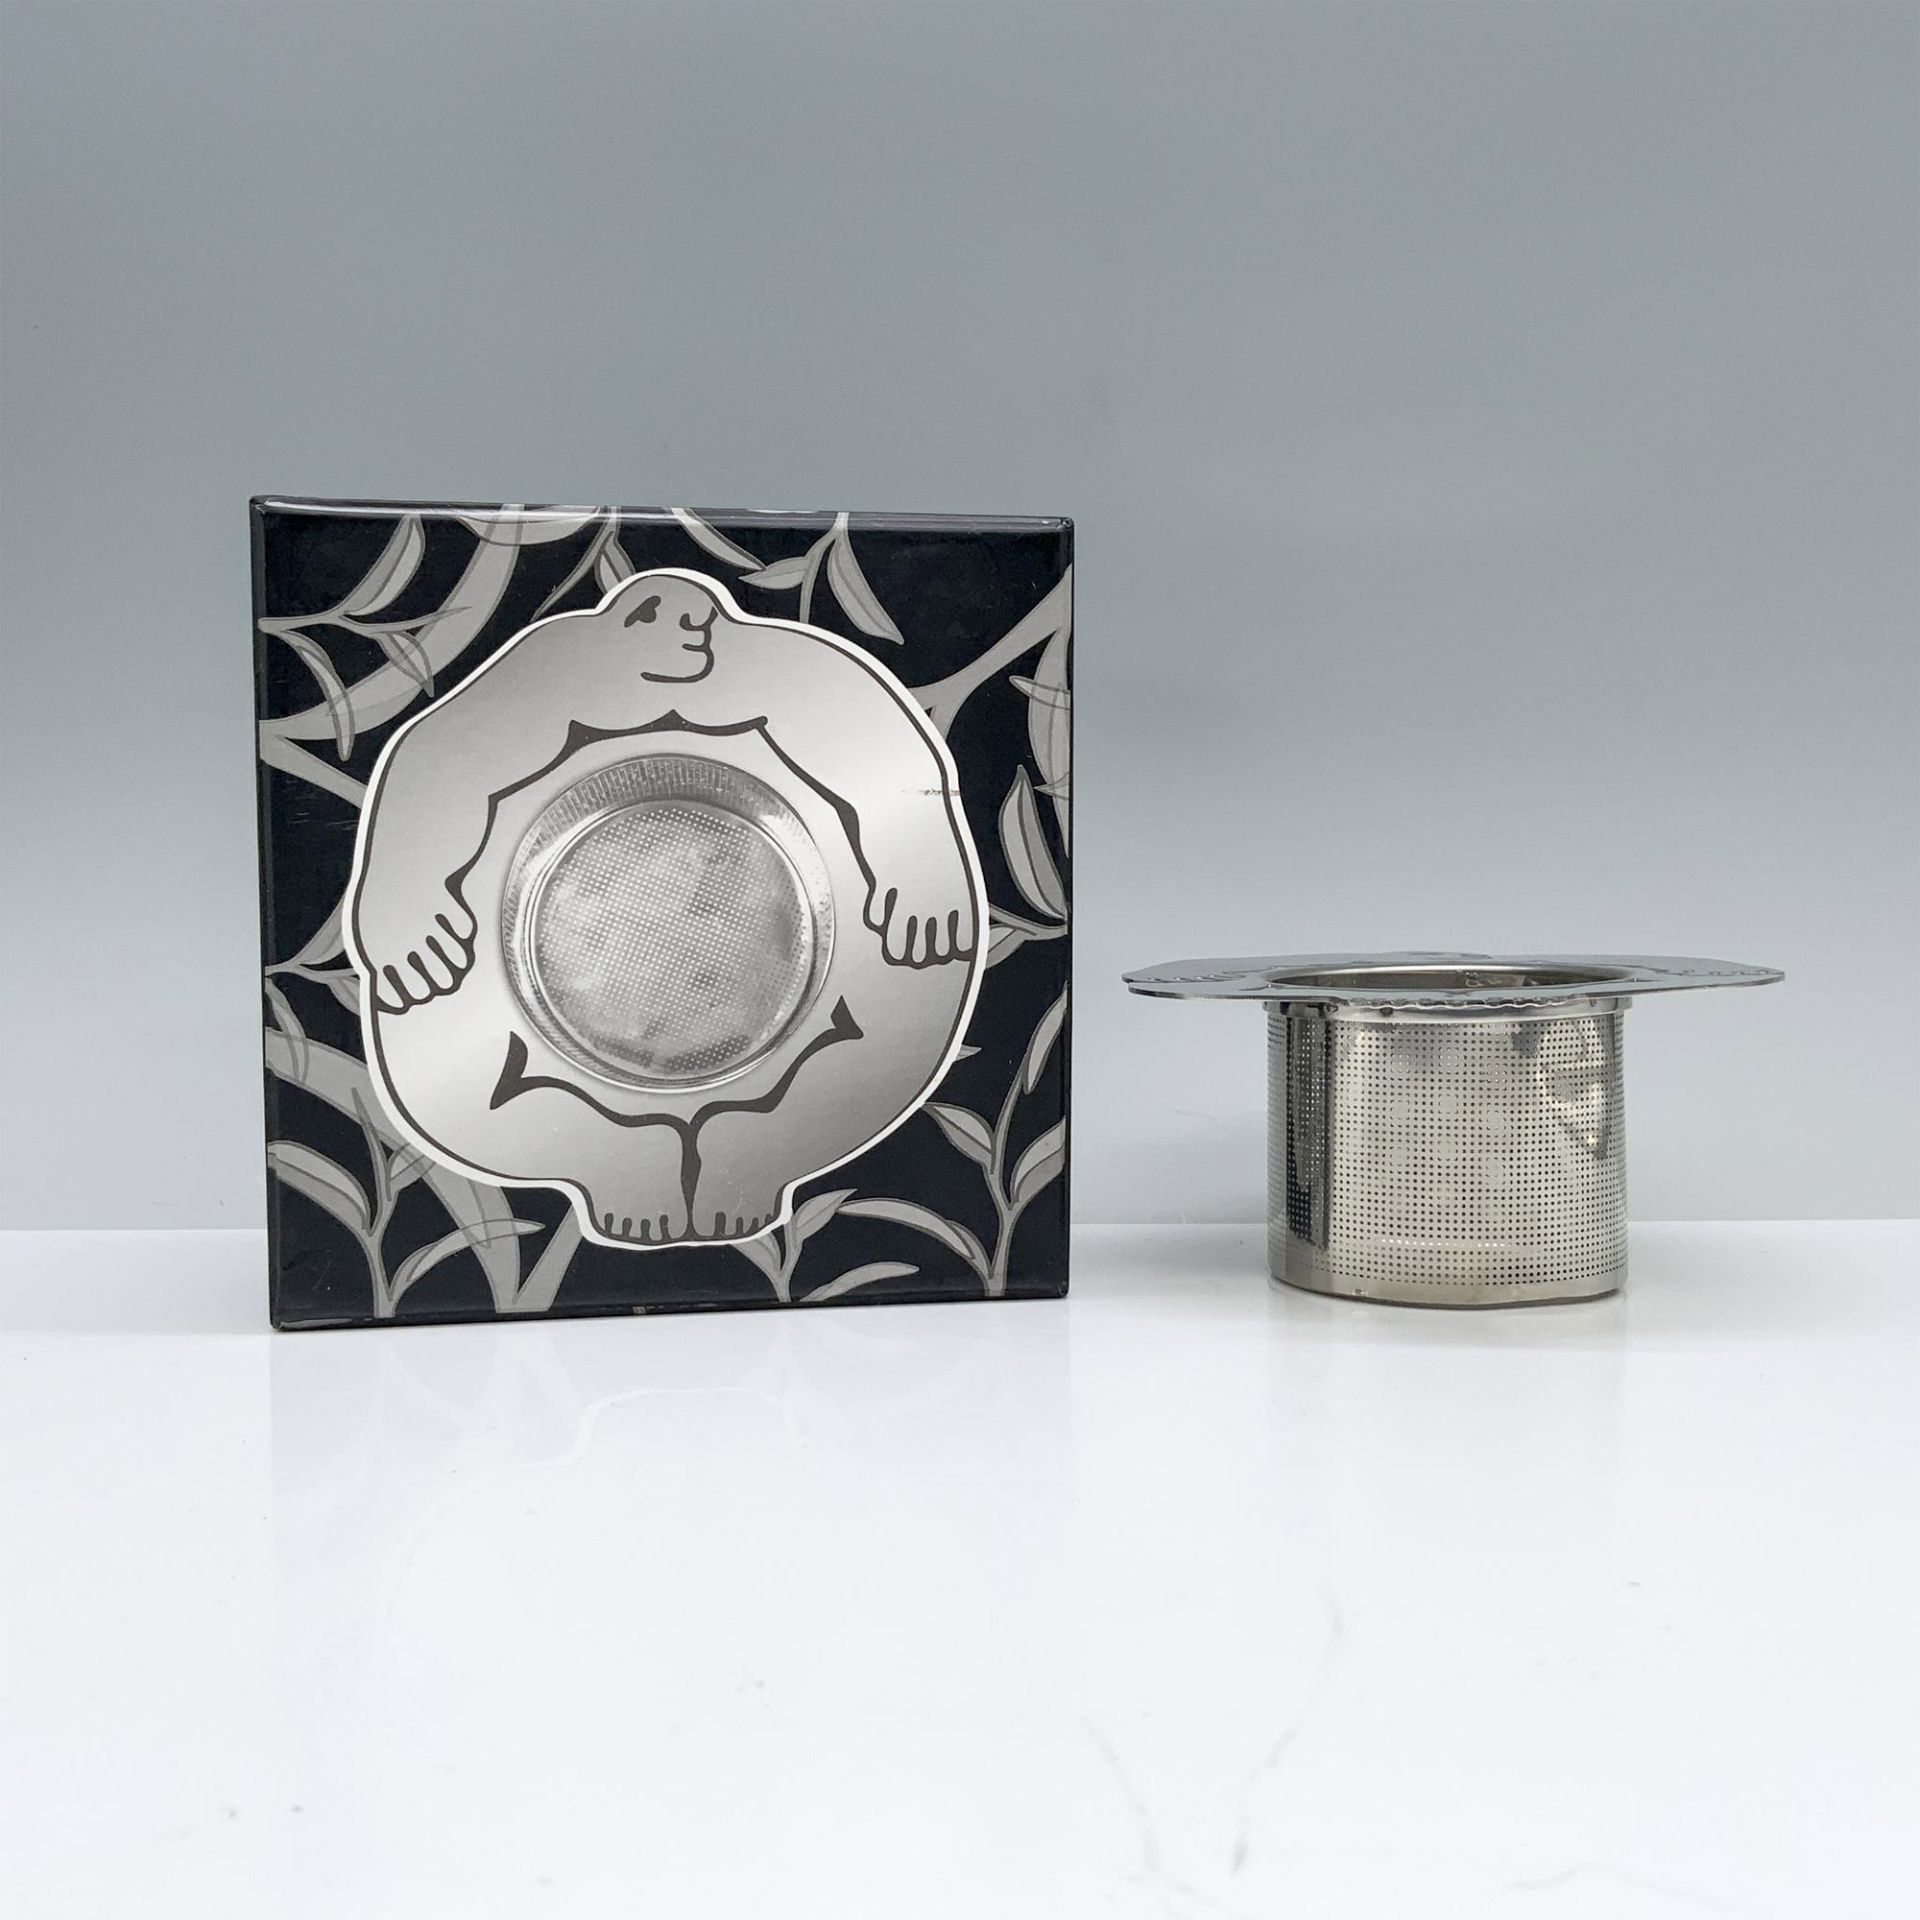 Carrol Boyes Aluminum Tea Infuser, Take It Easy - Image 4 of 4